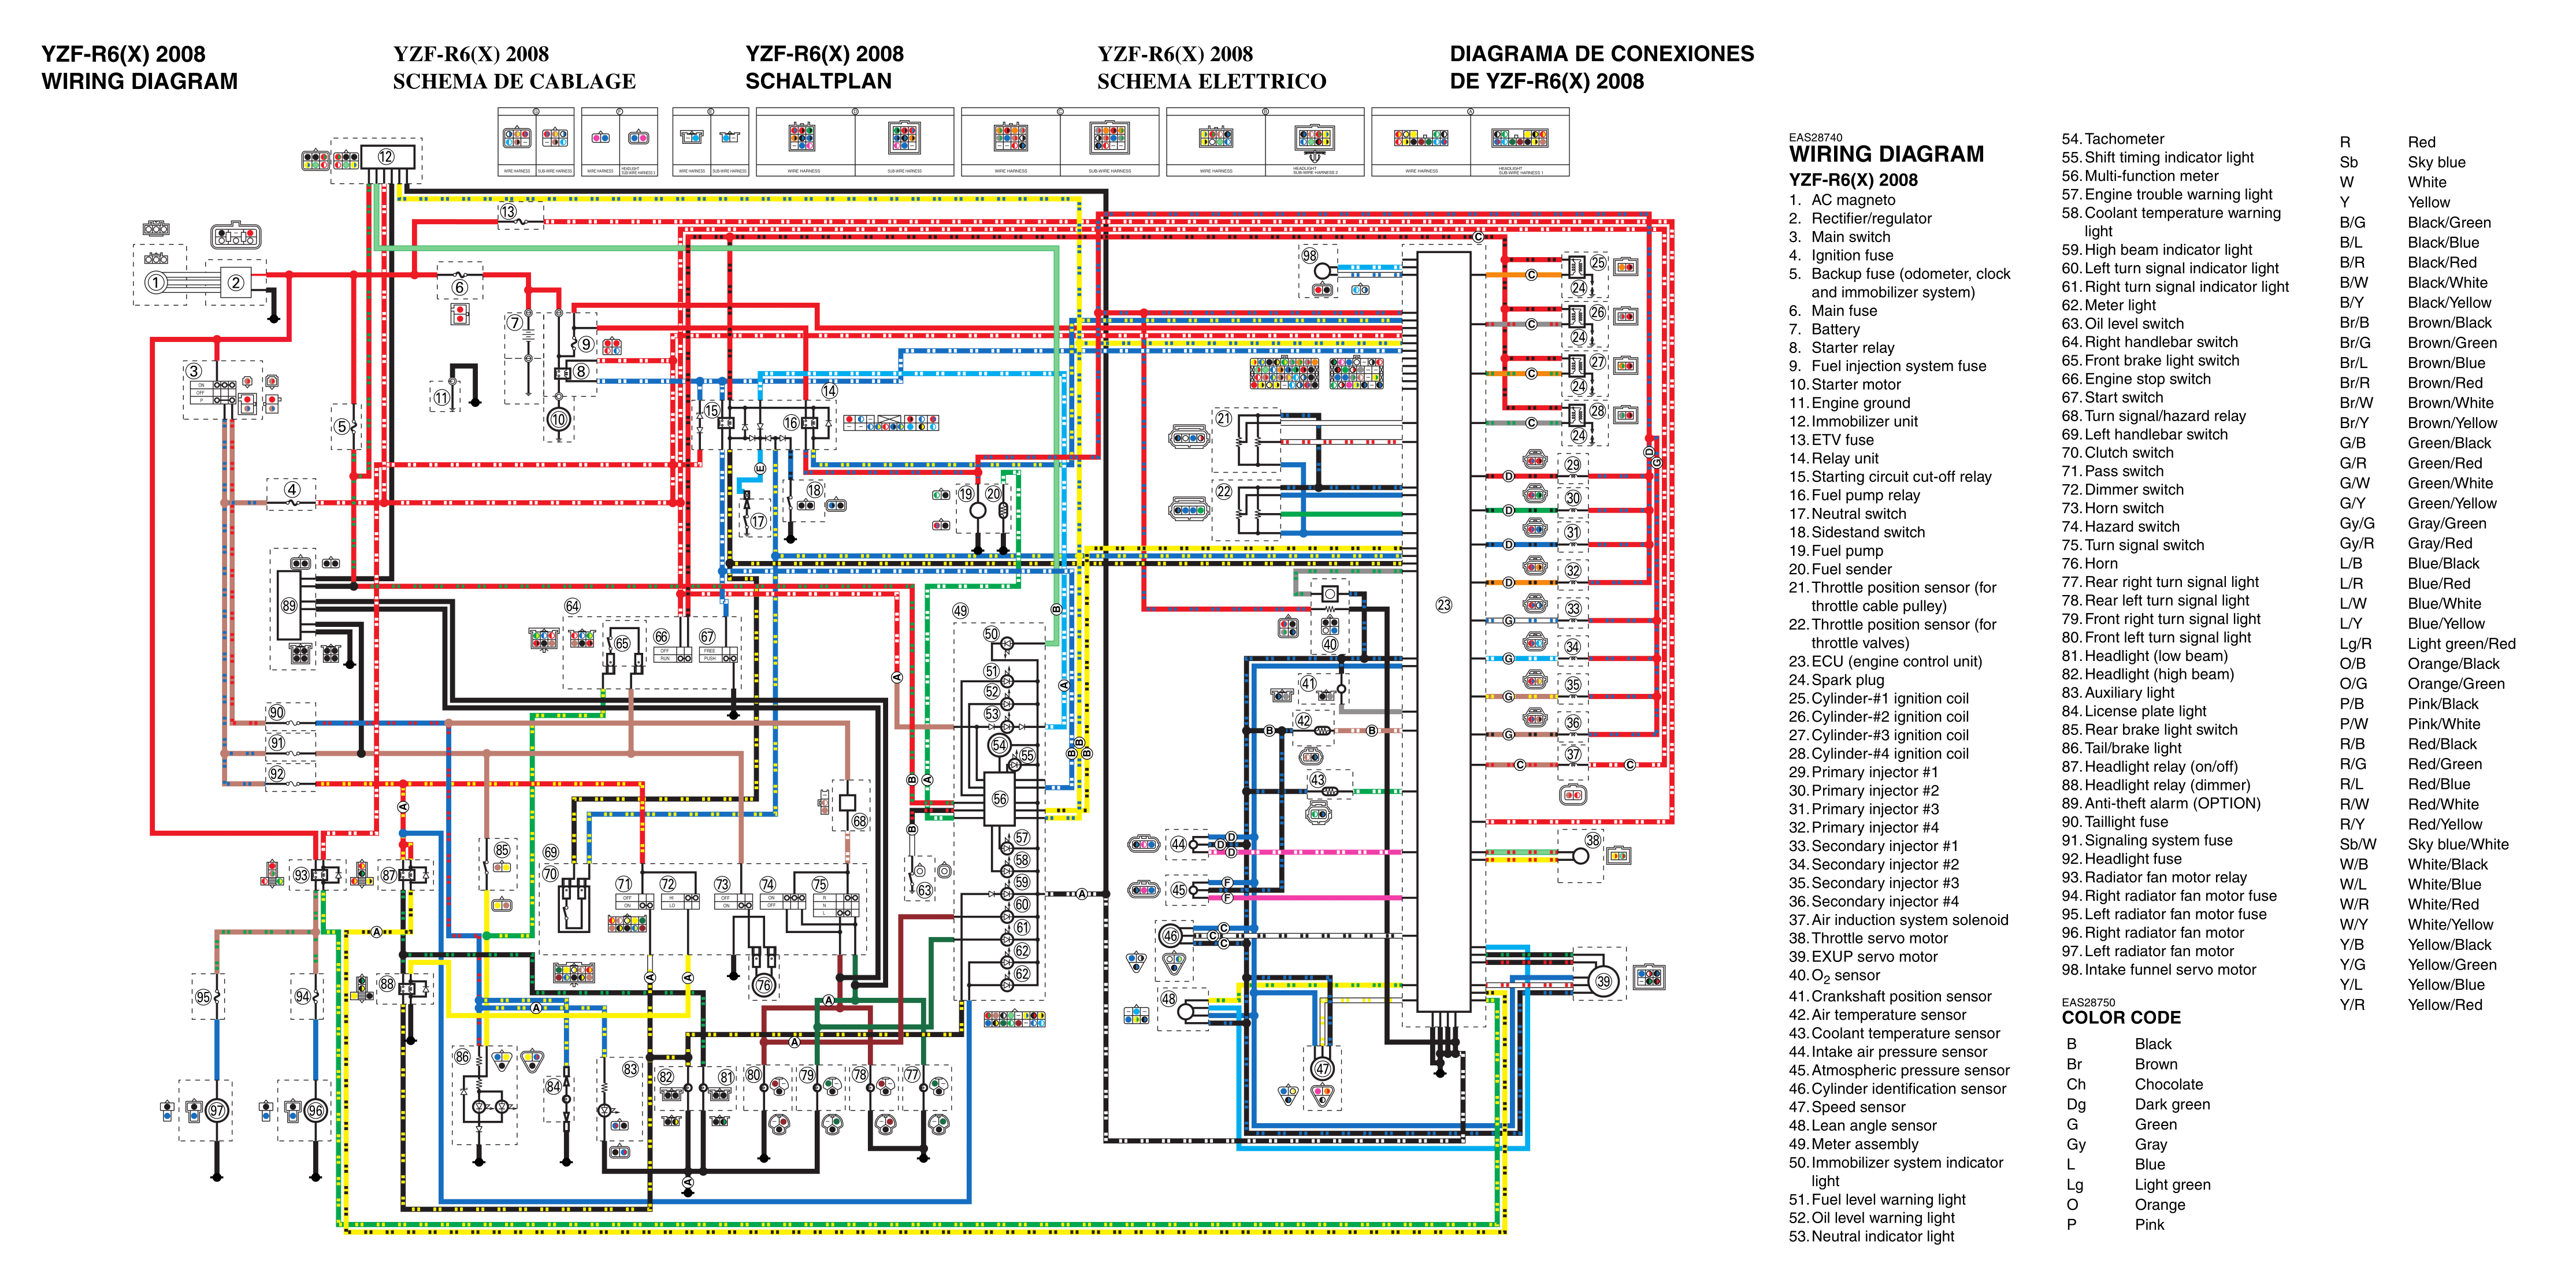 Wiring diagrams Yamaha R6 Engine Shifting ContRoll